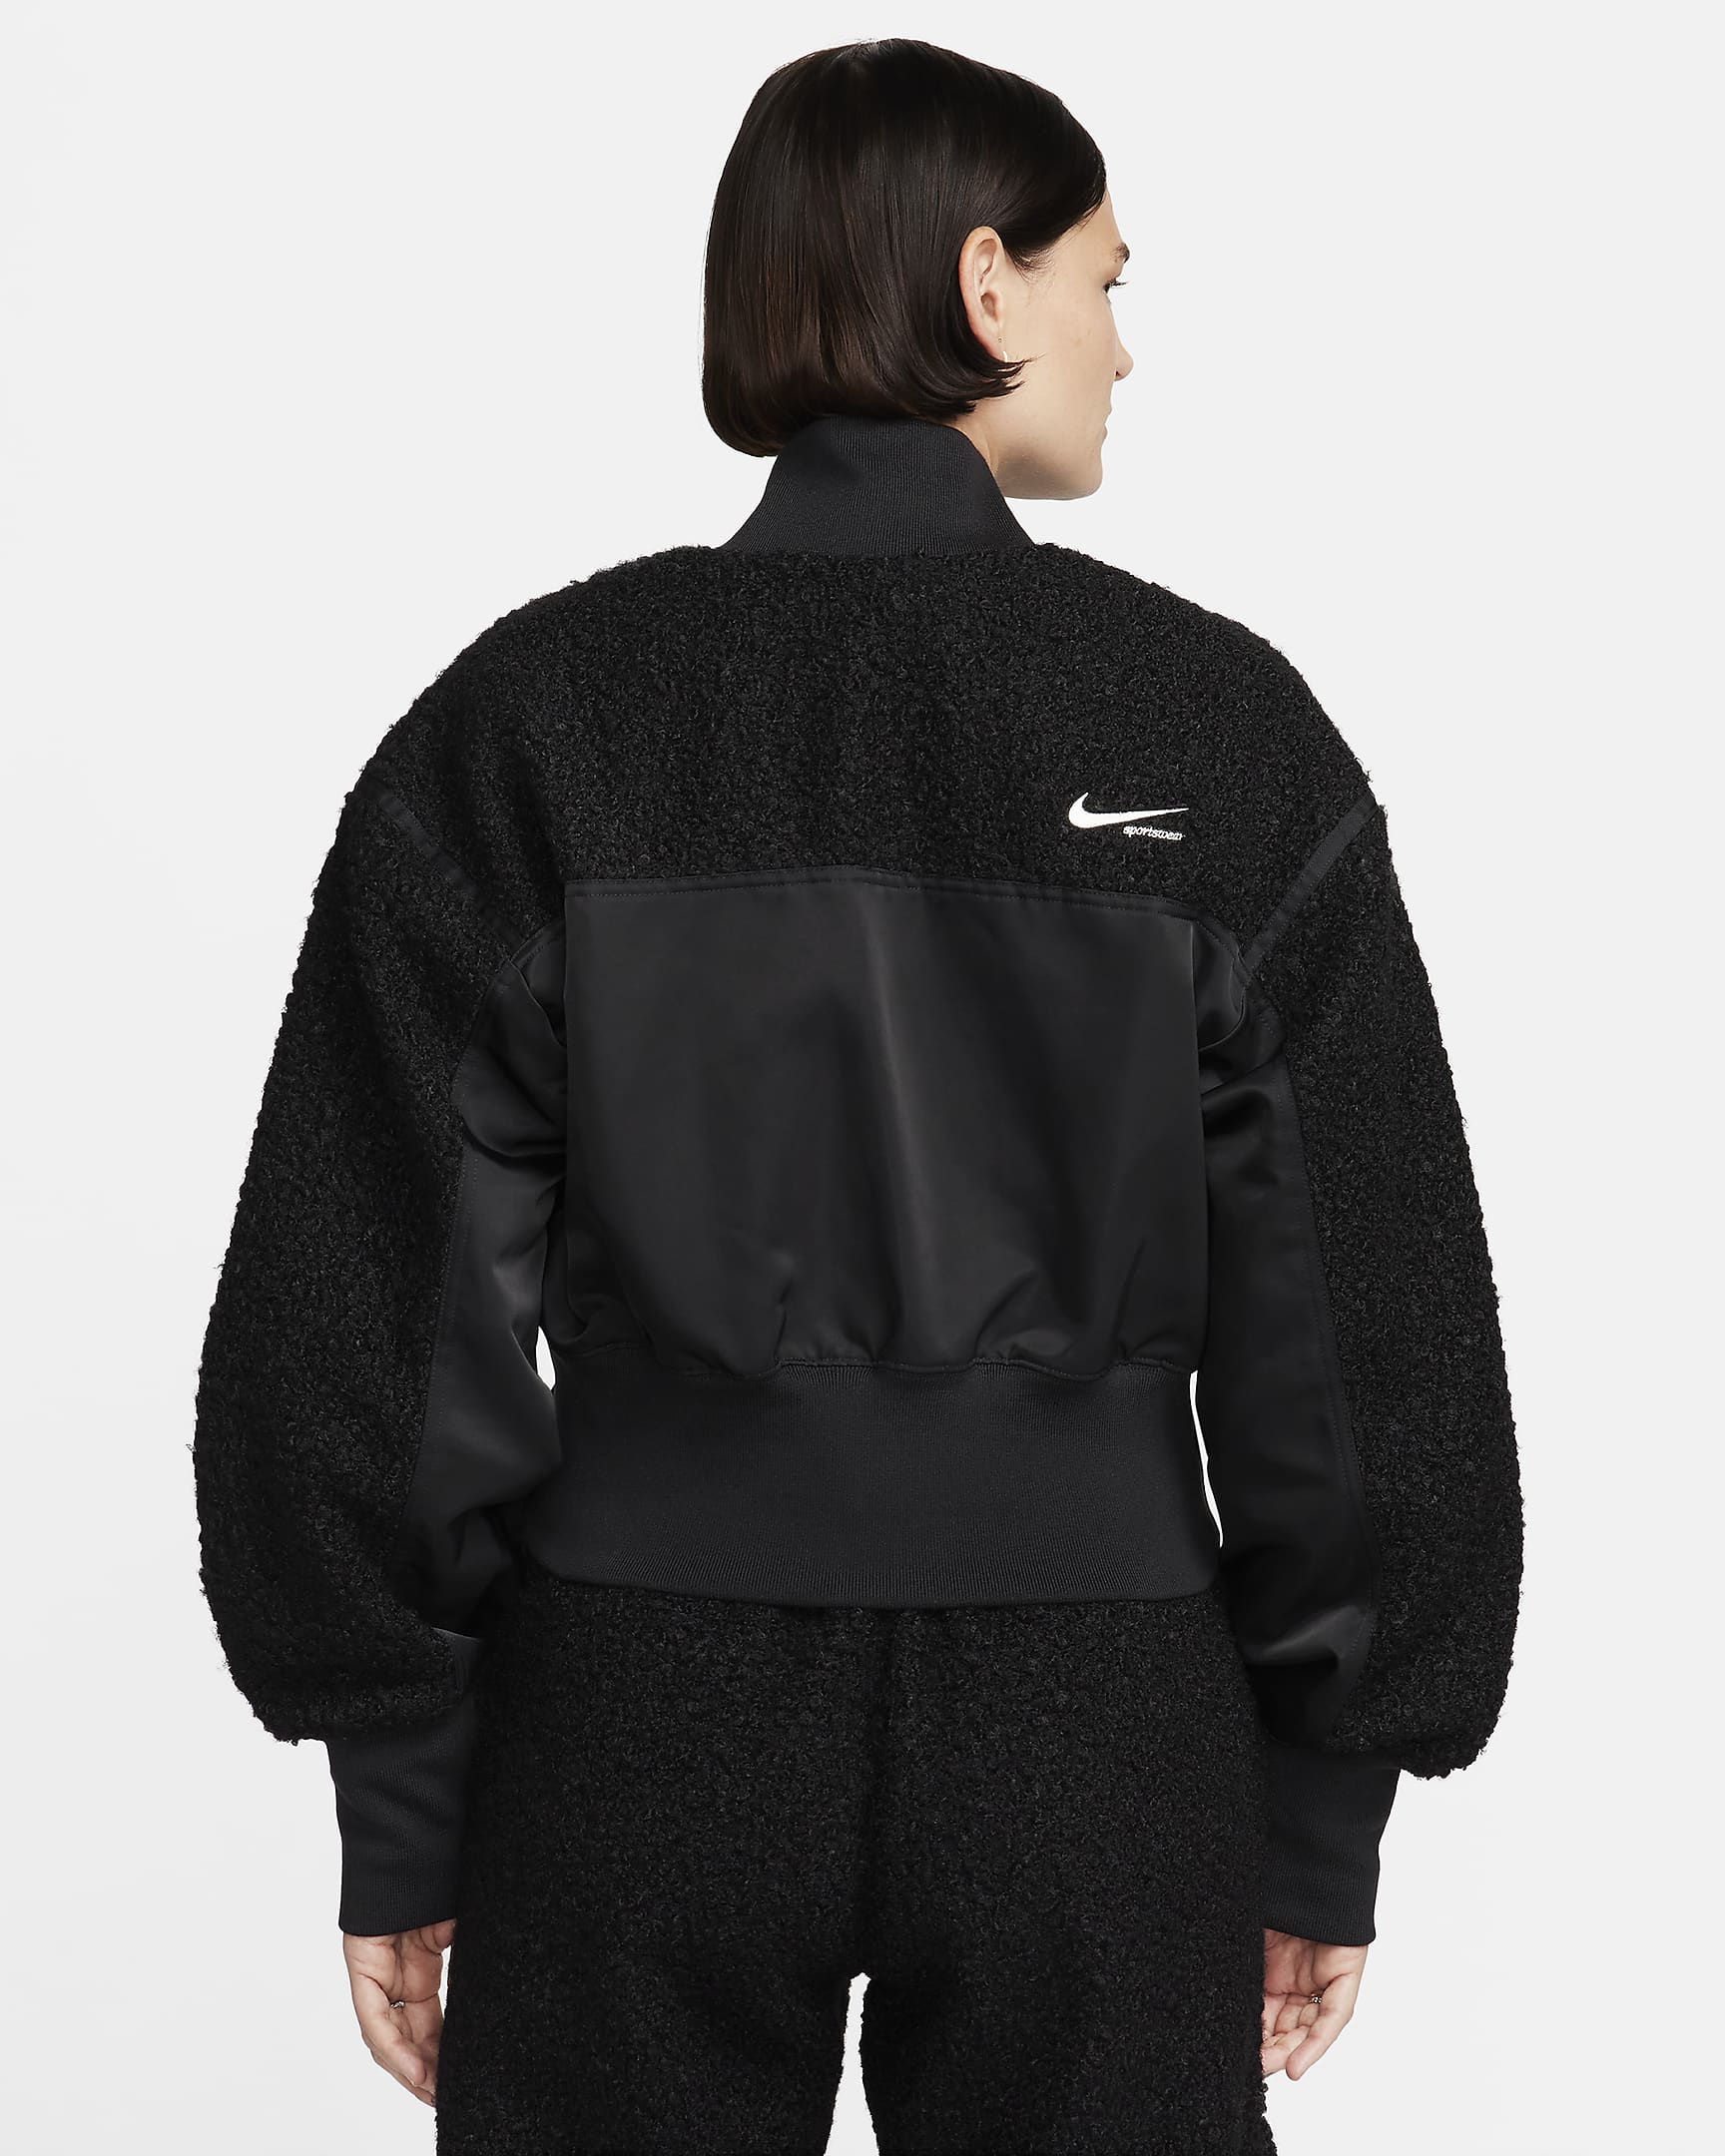 Nike Sportswear Collection Women's High-Pile Fleece Bomber Jacket. Nike HR